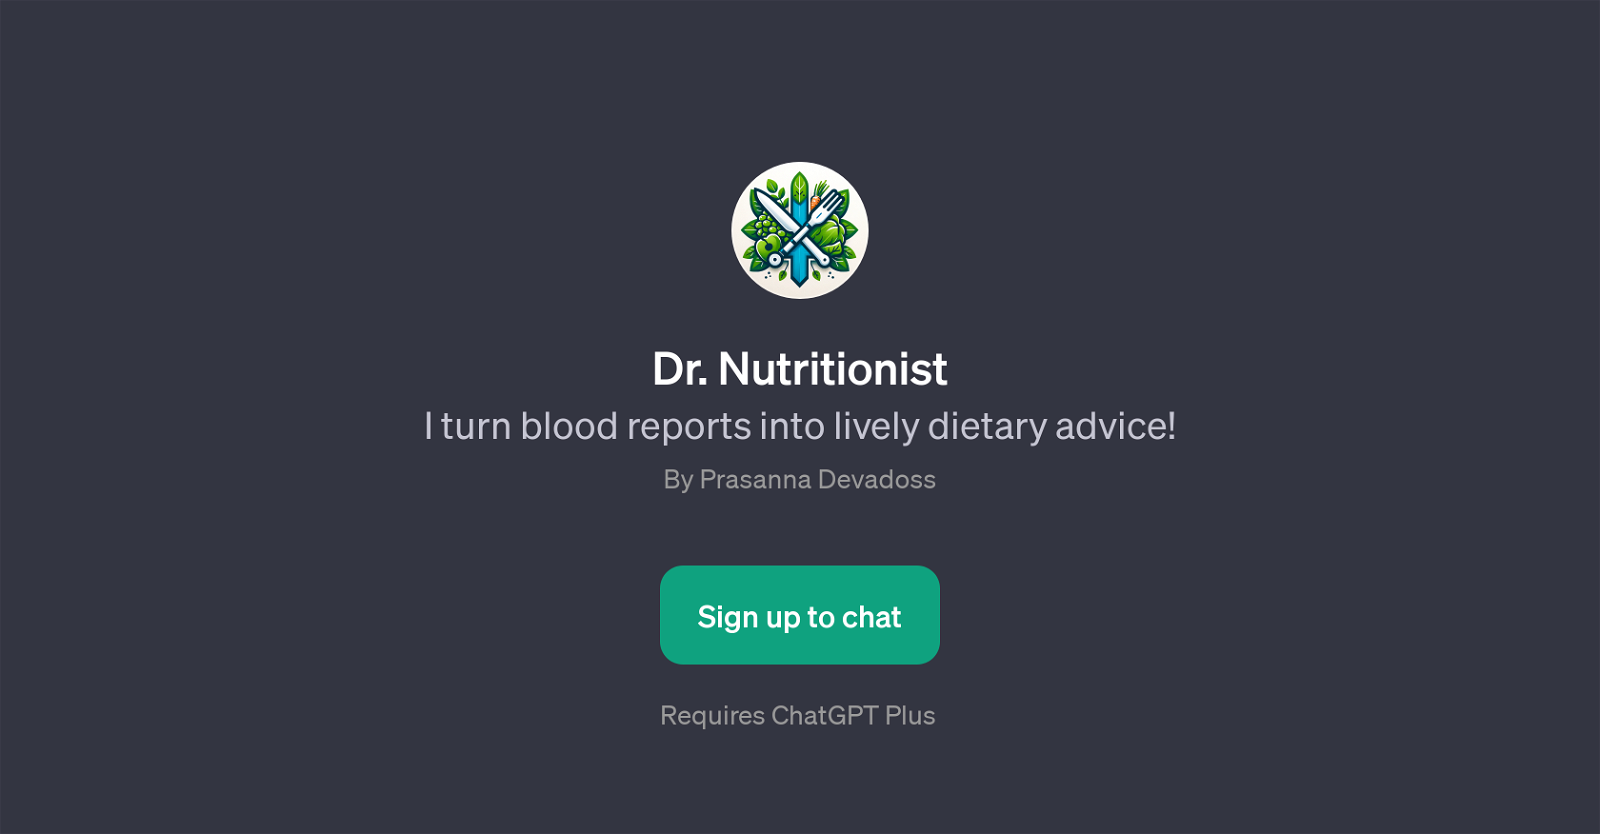 Dr. Nutritionist website